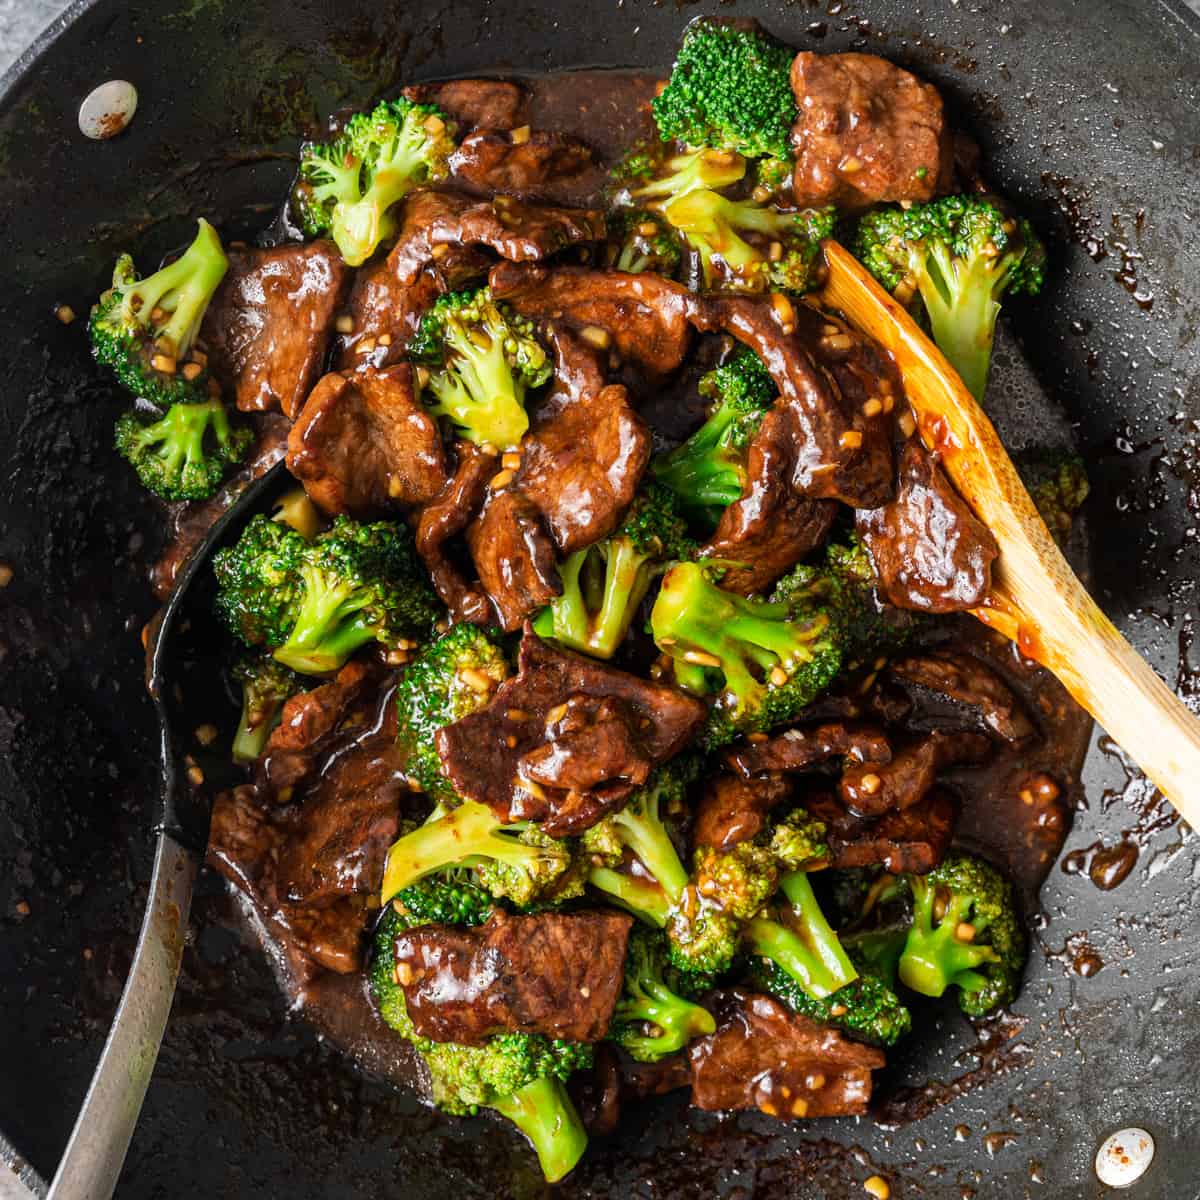 Broccoli Beef Stir Fry in a pan